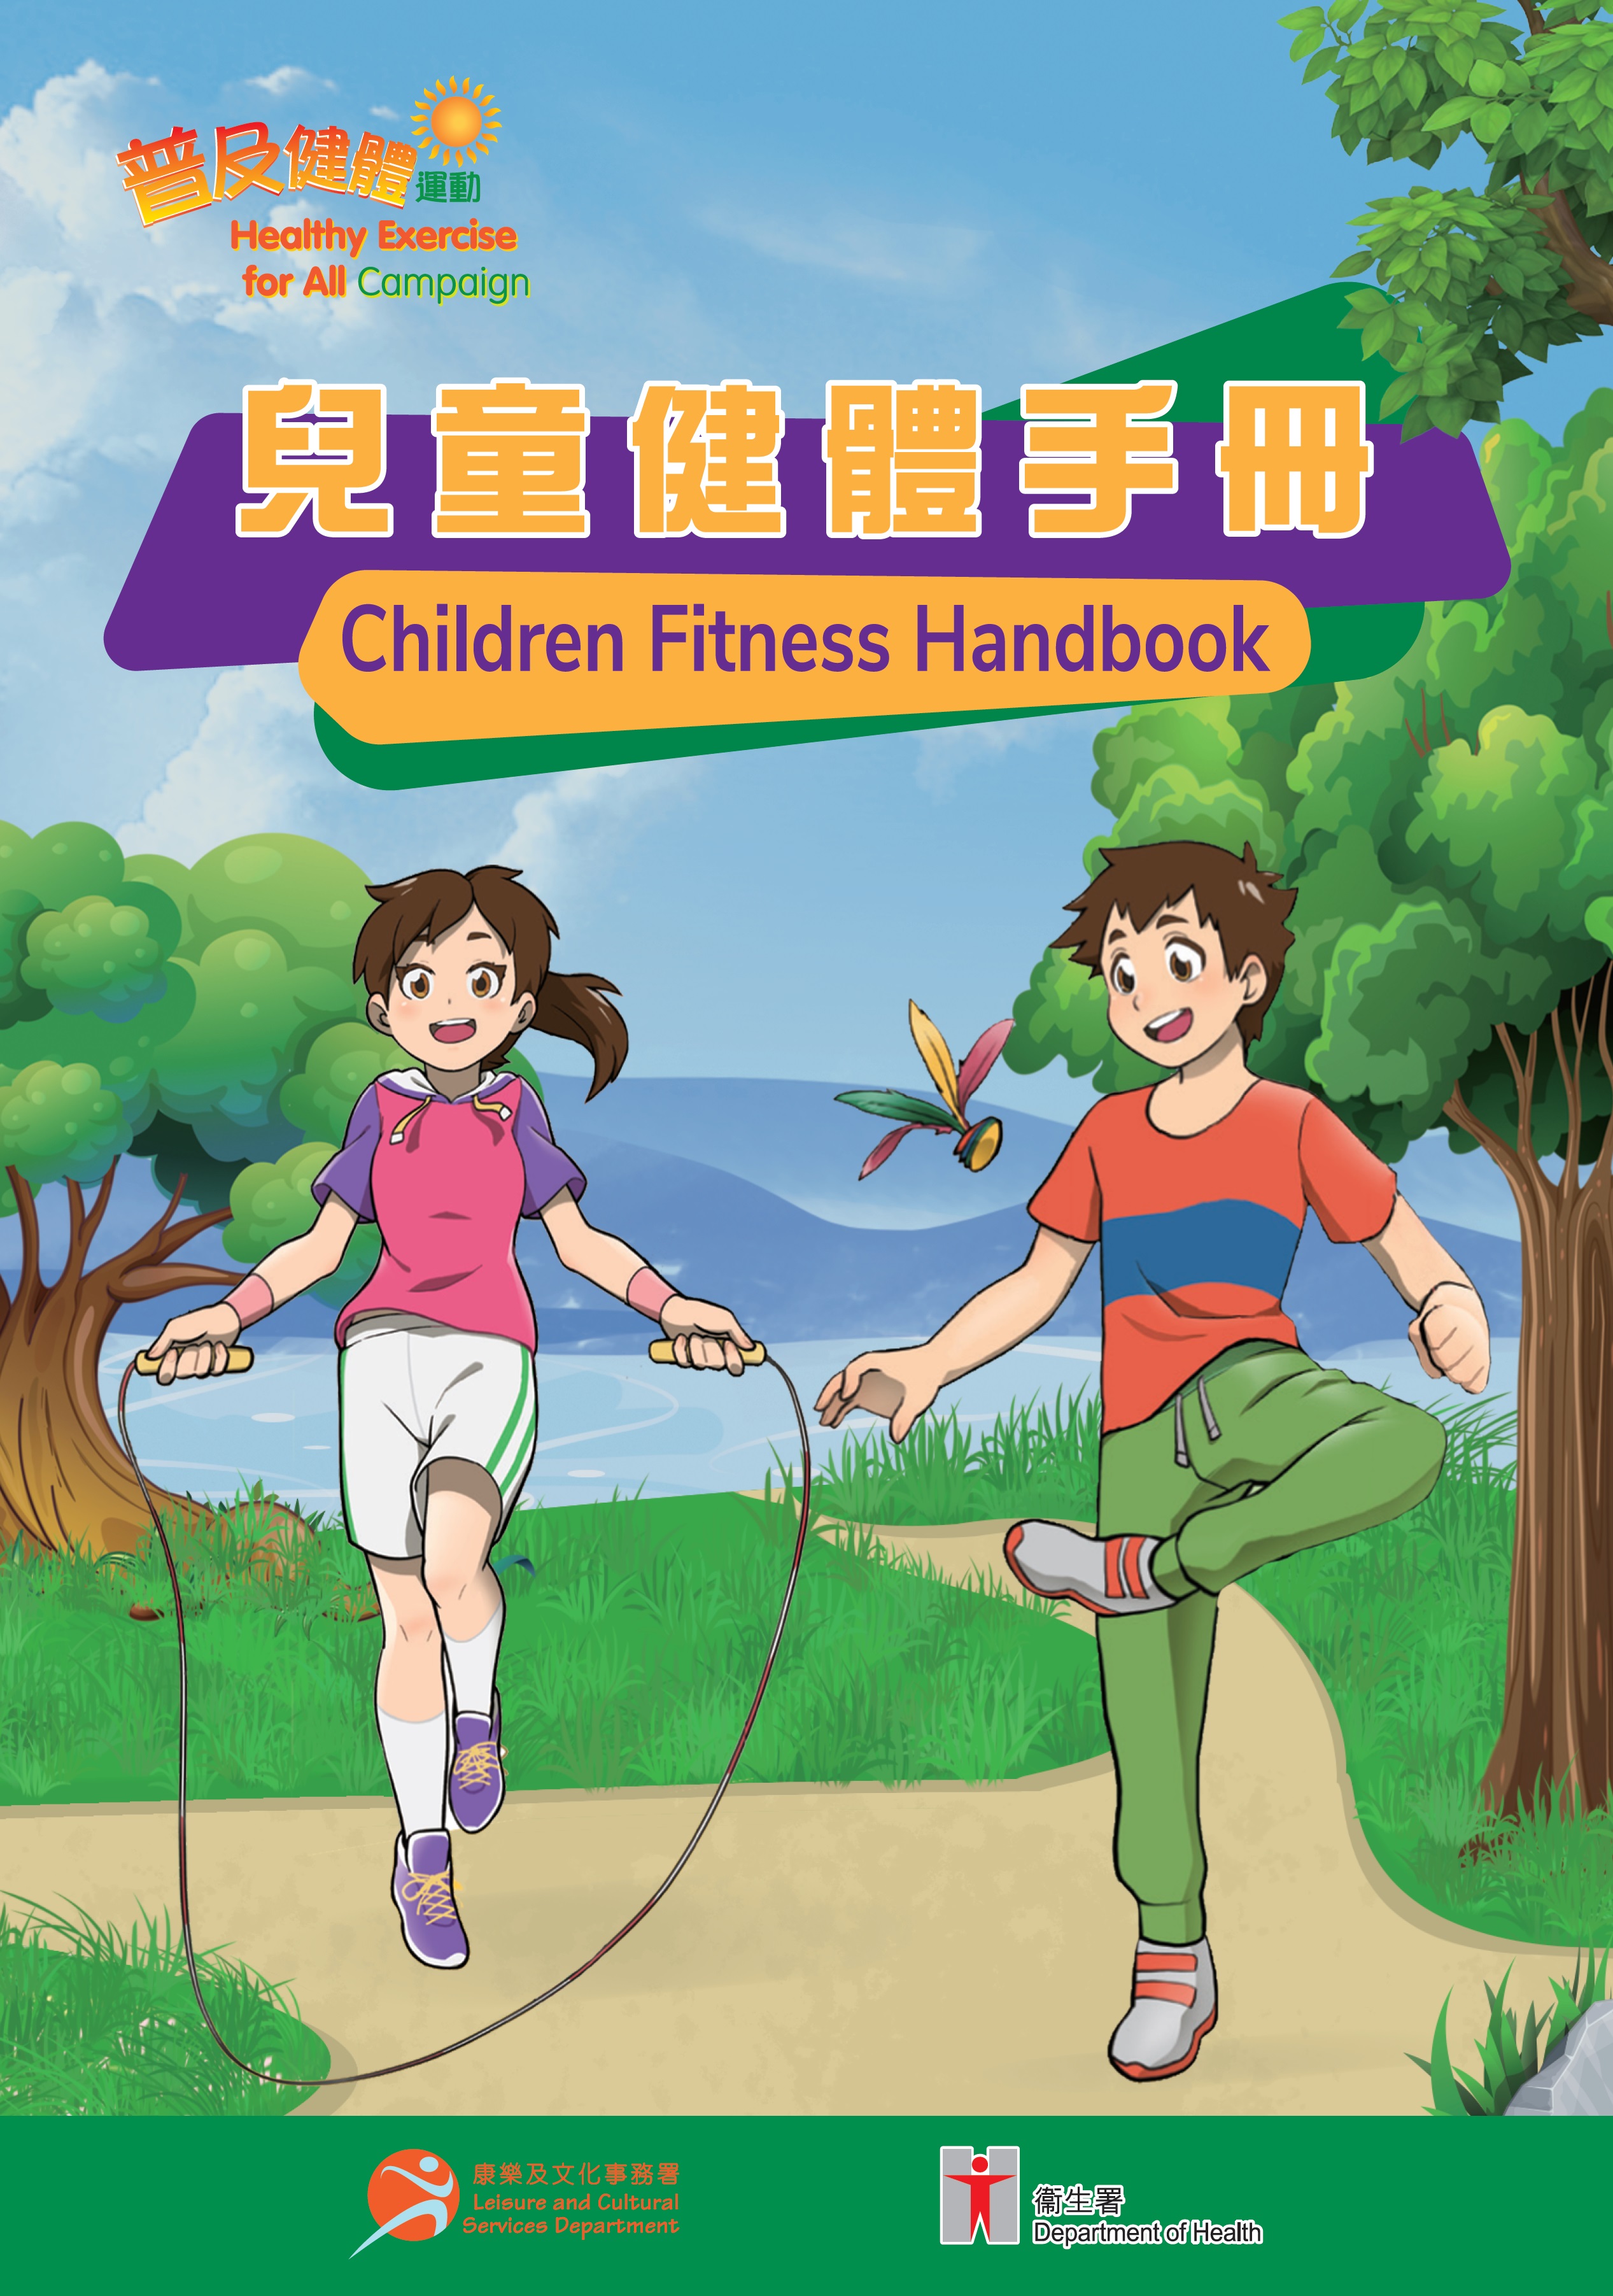 Children Fitness Handbook